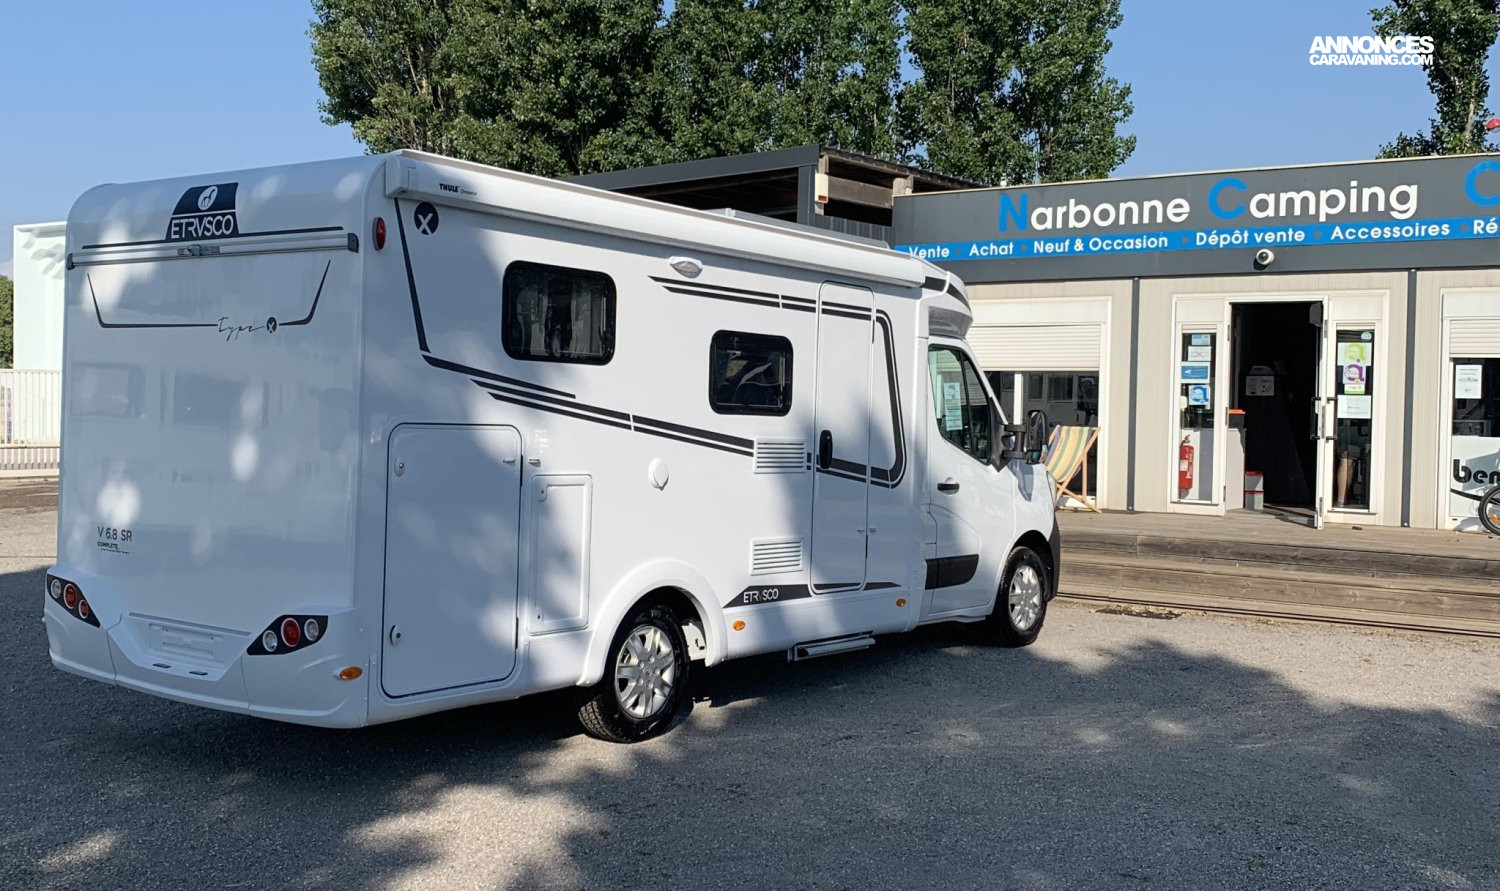 Camping-car Etrusco V6.8 SR / 1 500€ D'ACCESSOIRES OFFERTS